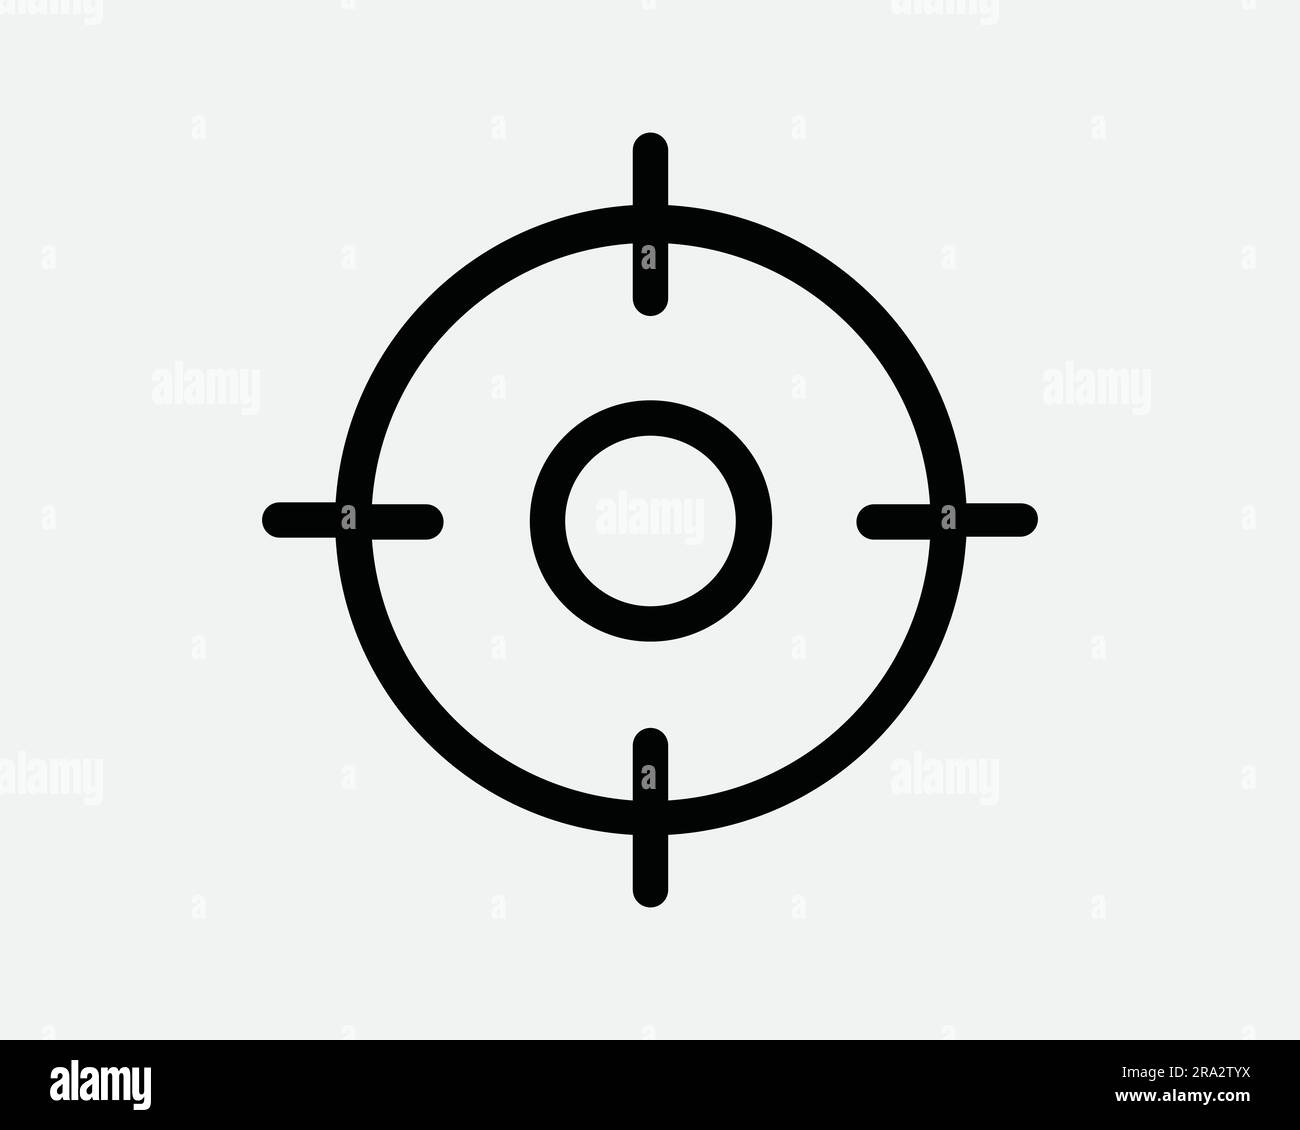 Round Crosshair Icon. Target Aim Cross Sight Military Gun Shoot Shooting Sniper Mark Point Black White Graphic Clipart Artwork Symbol Sign Vector EPS Stock Vector